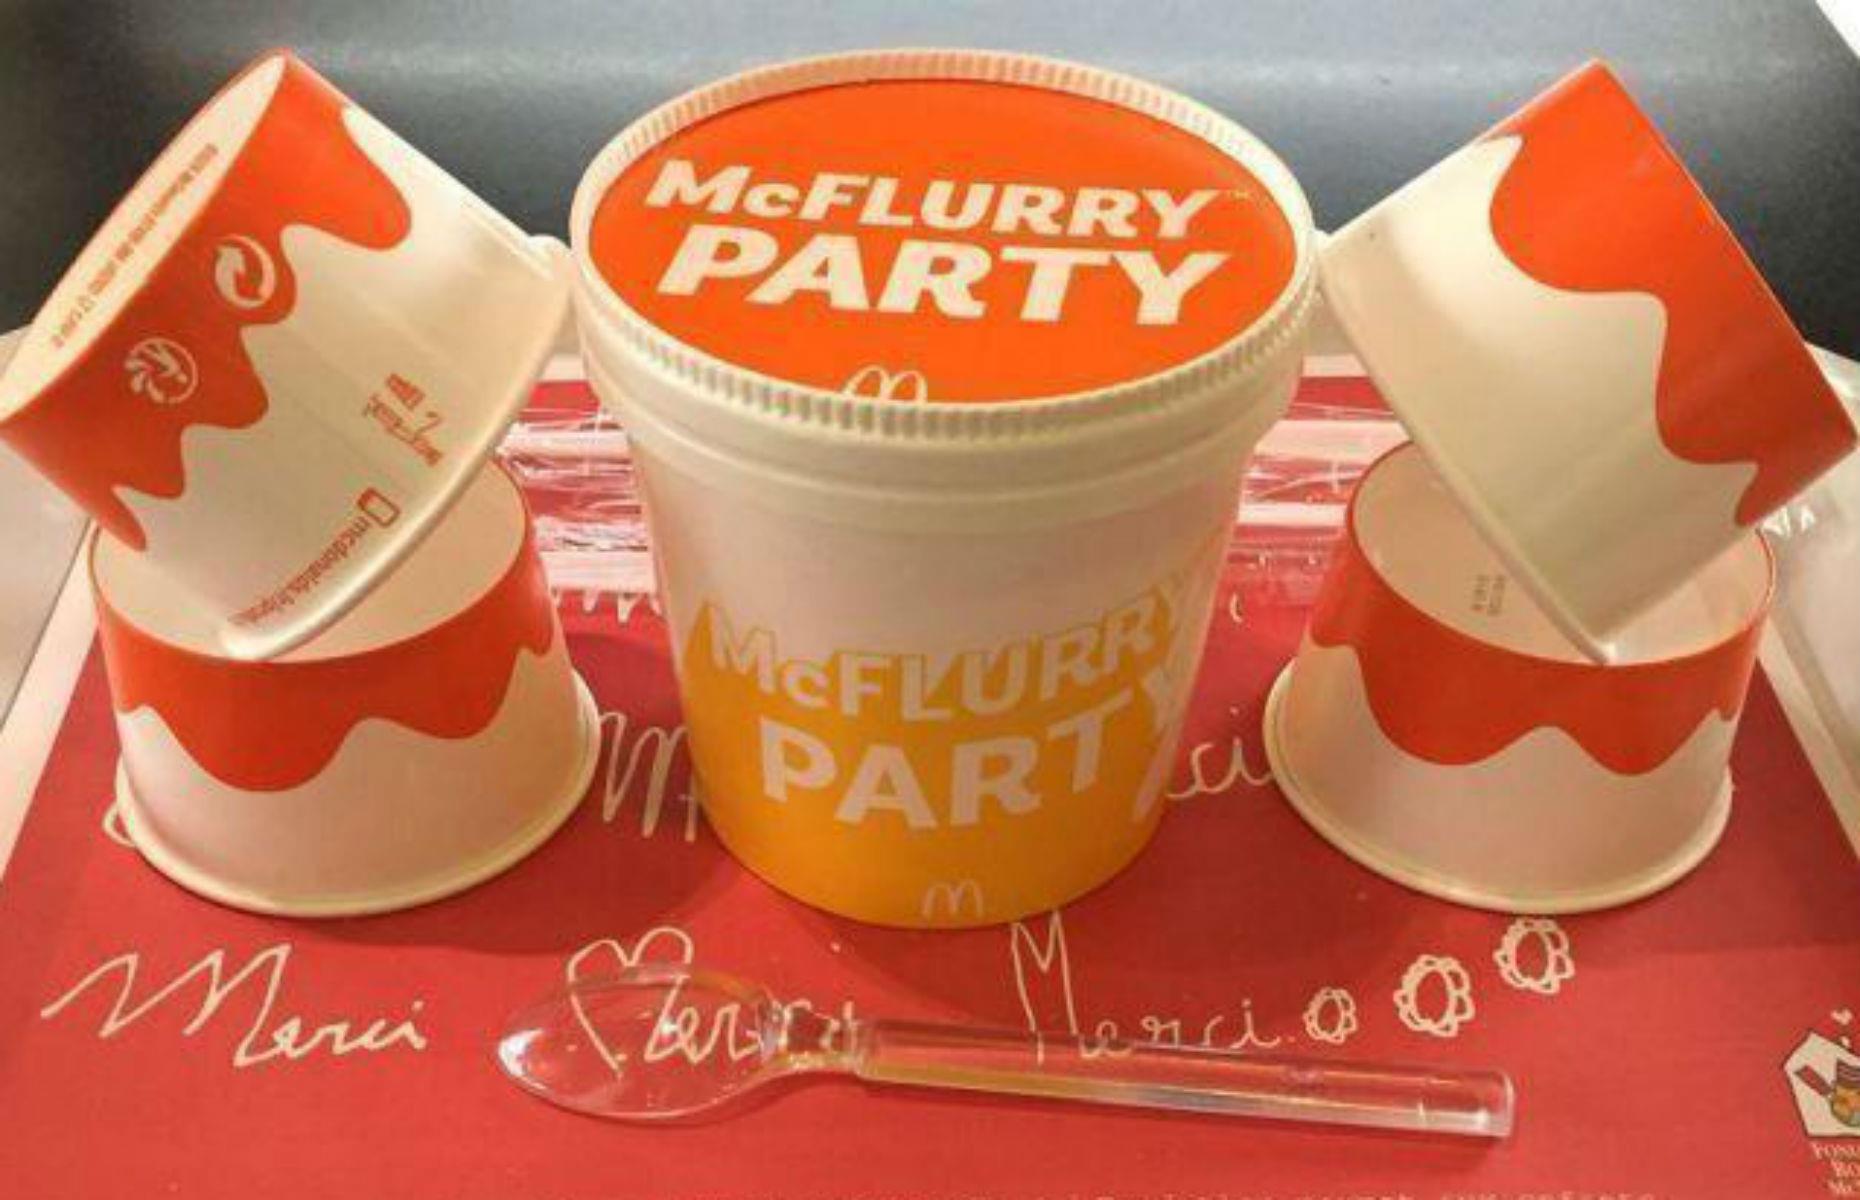 McFlurry Party – McDonald's France